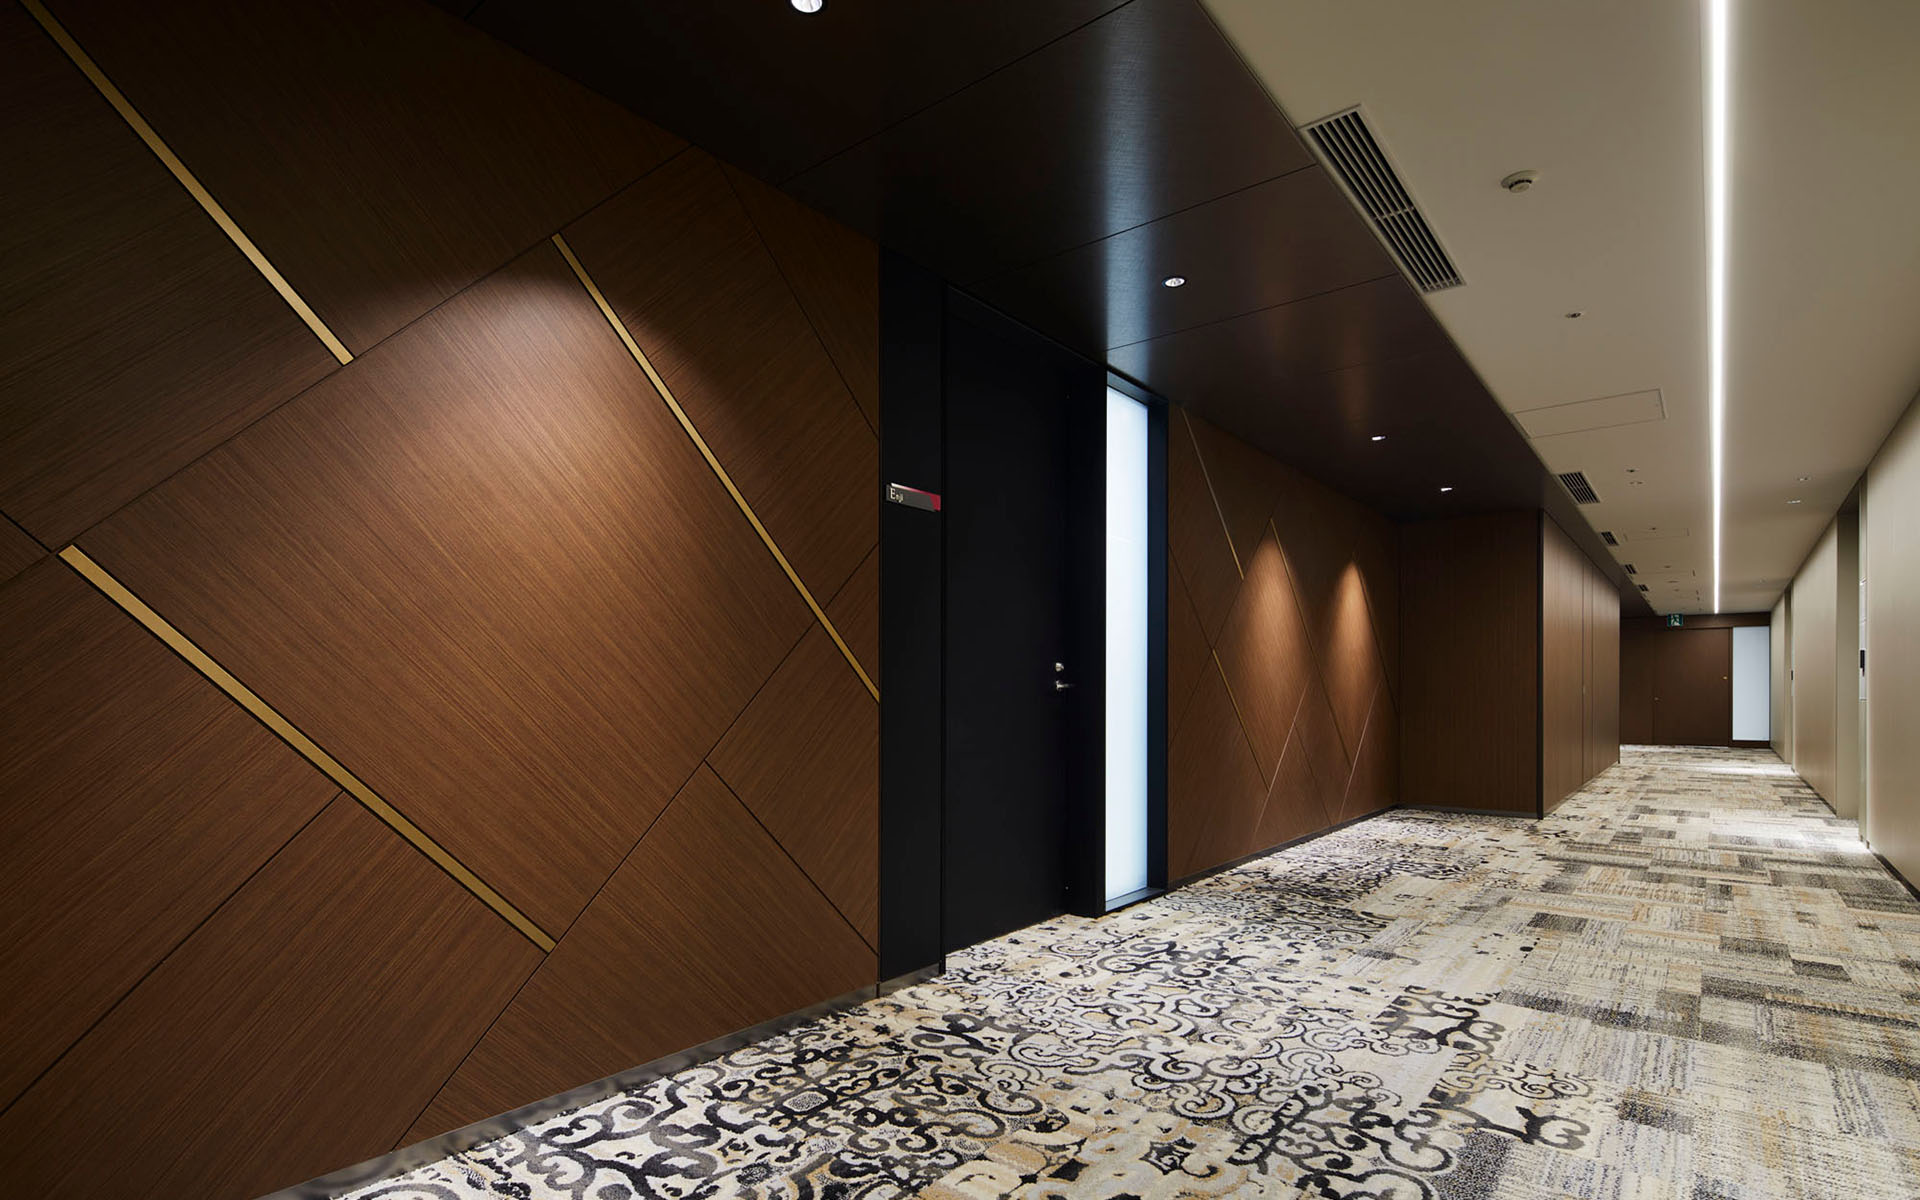 Corridor to meeting room